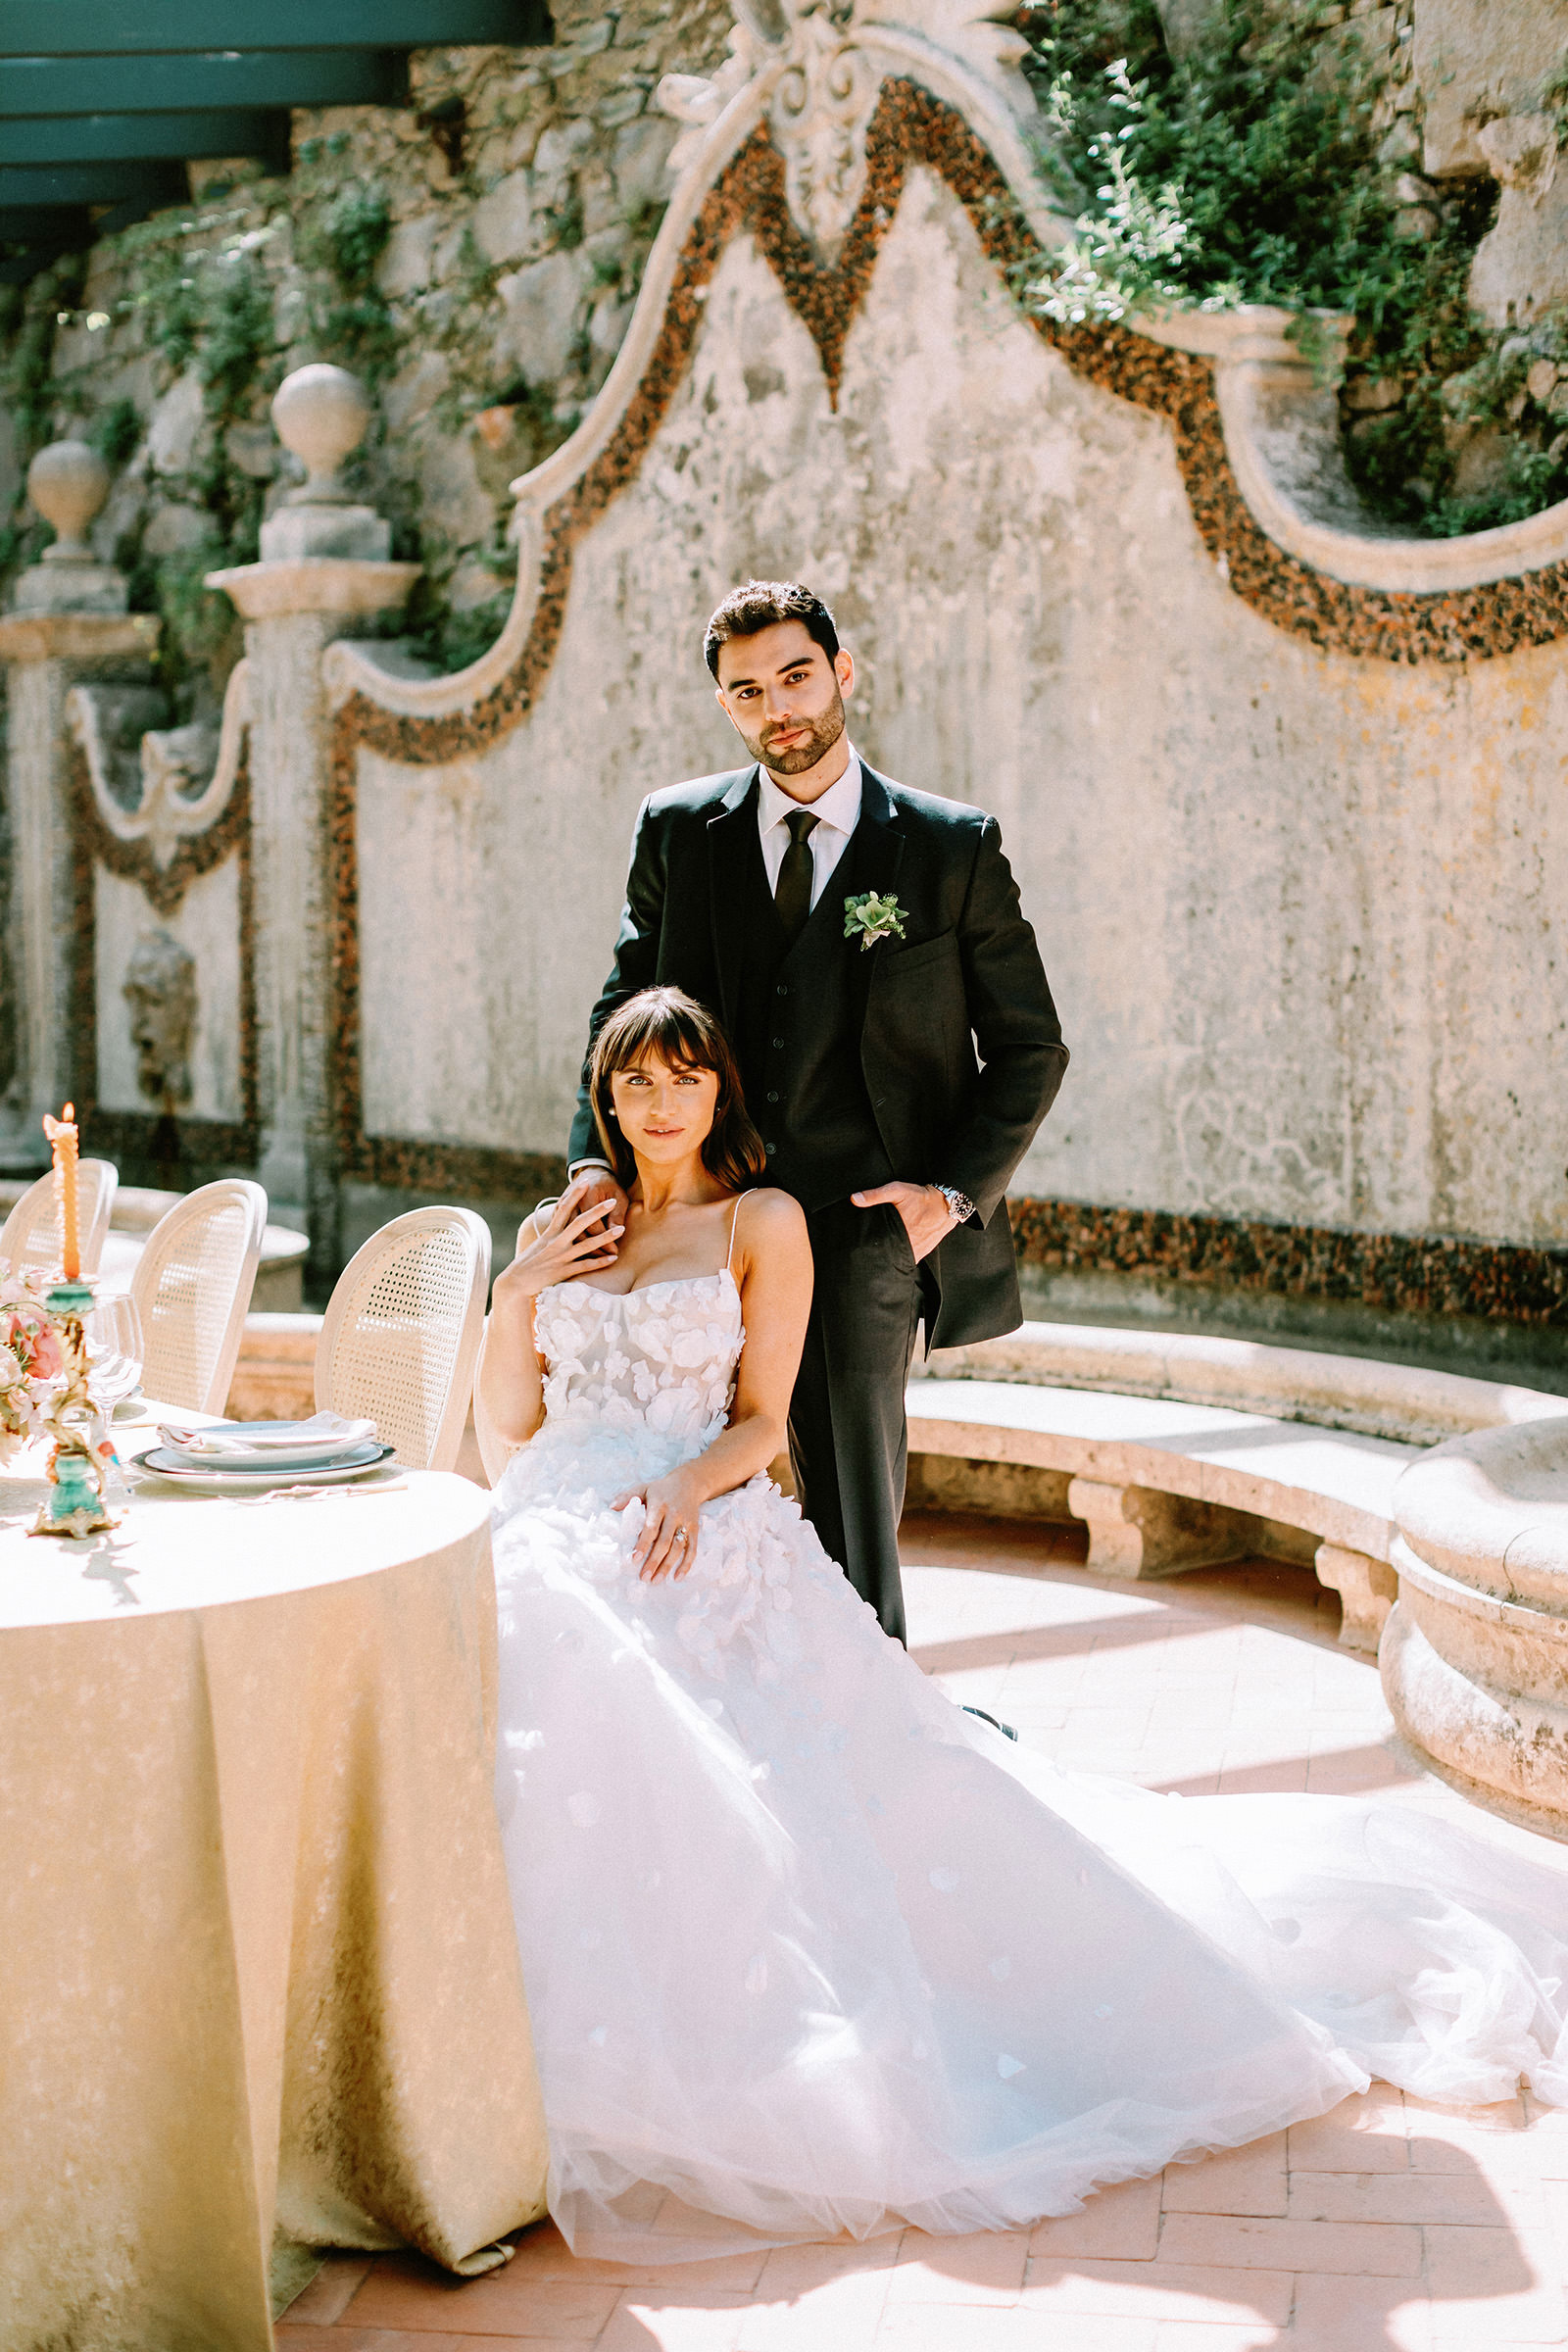 wedding portraits taken at luxury wedding venue Portugal